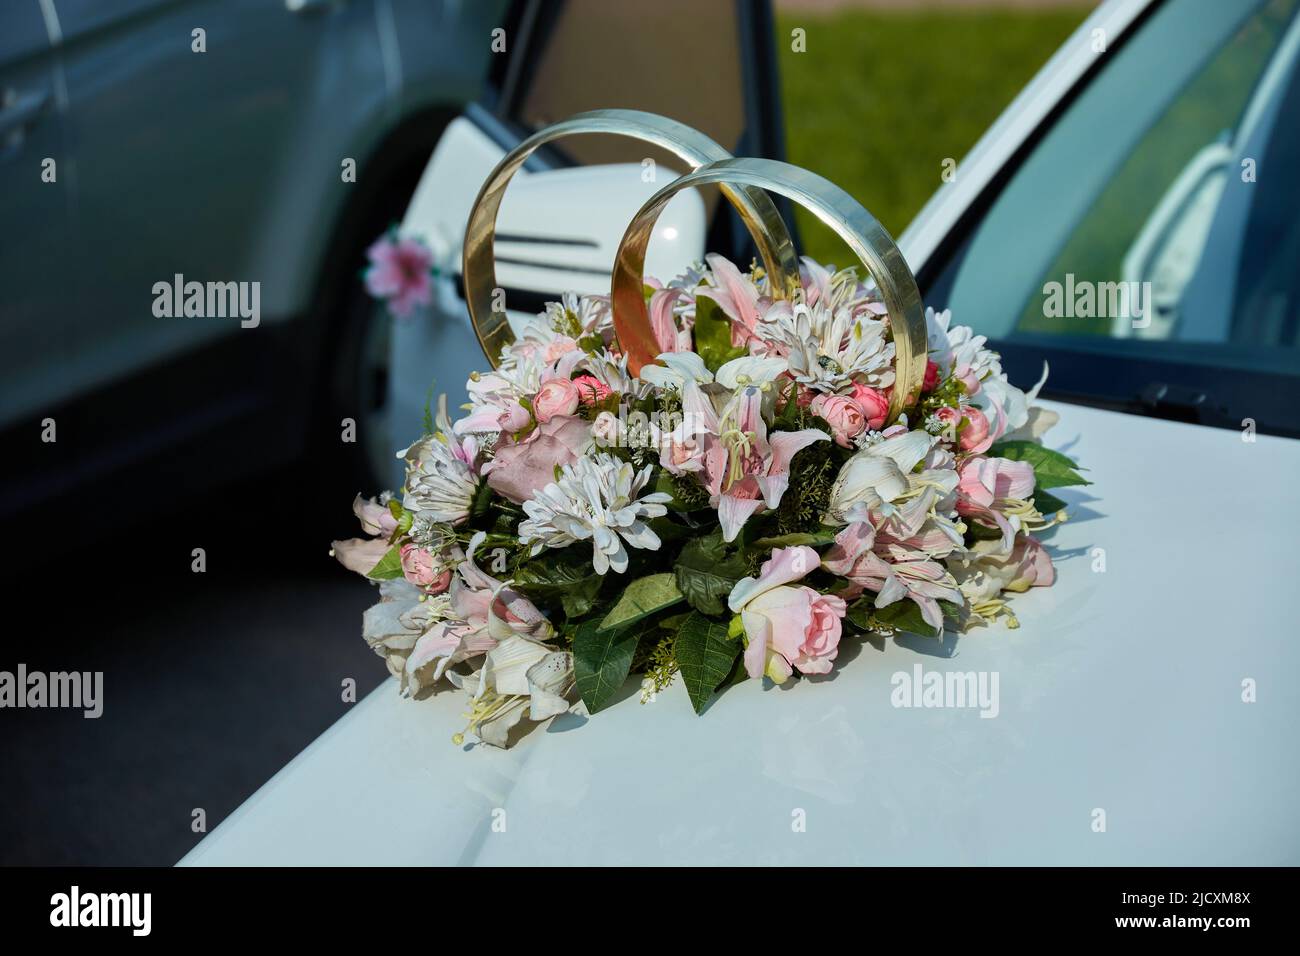 Wedding car decoration Stock Photo by ©galkin57 52448135